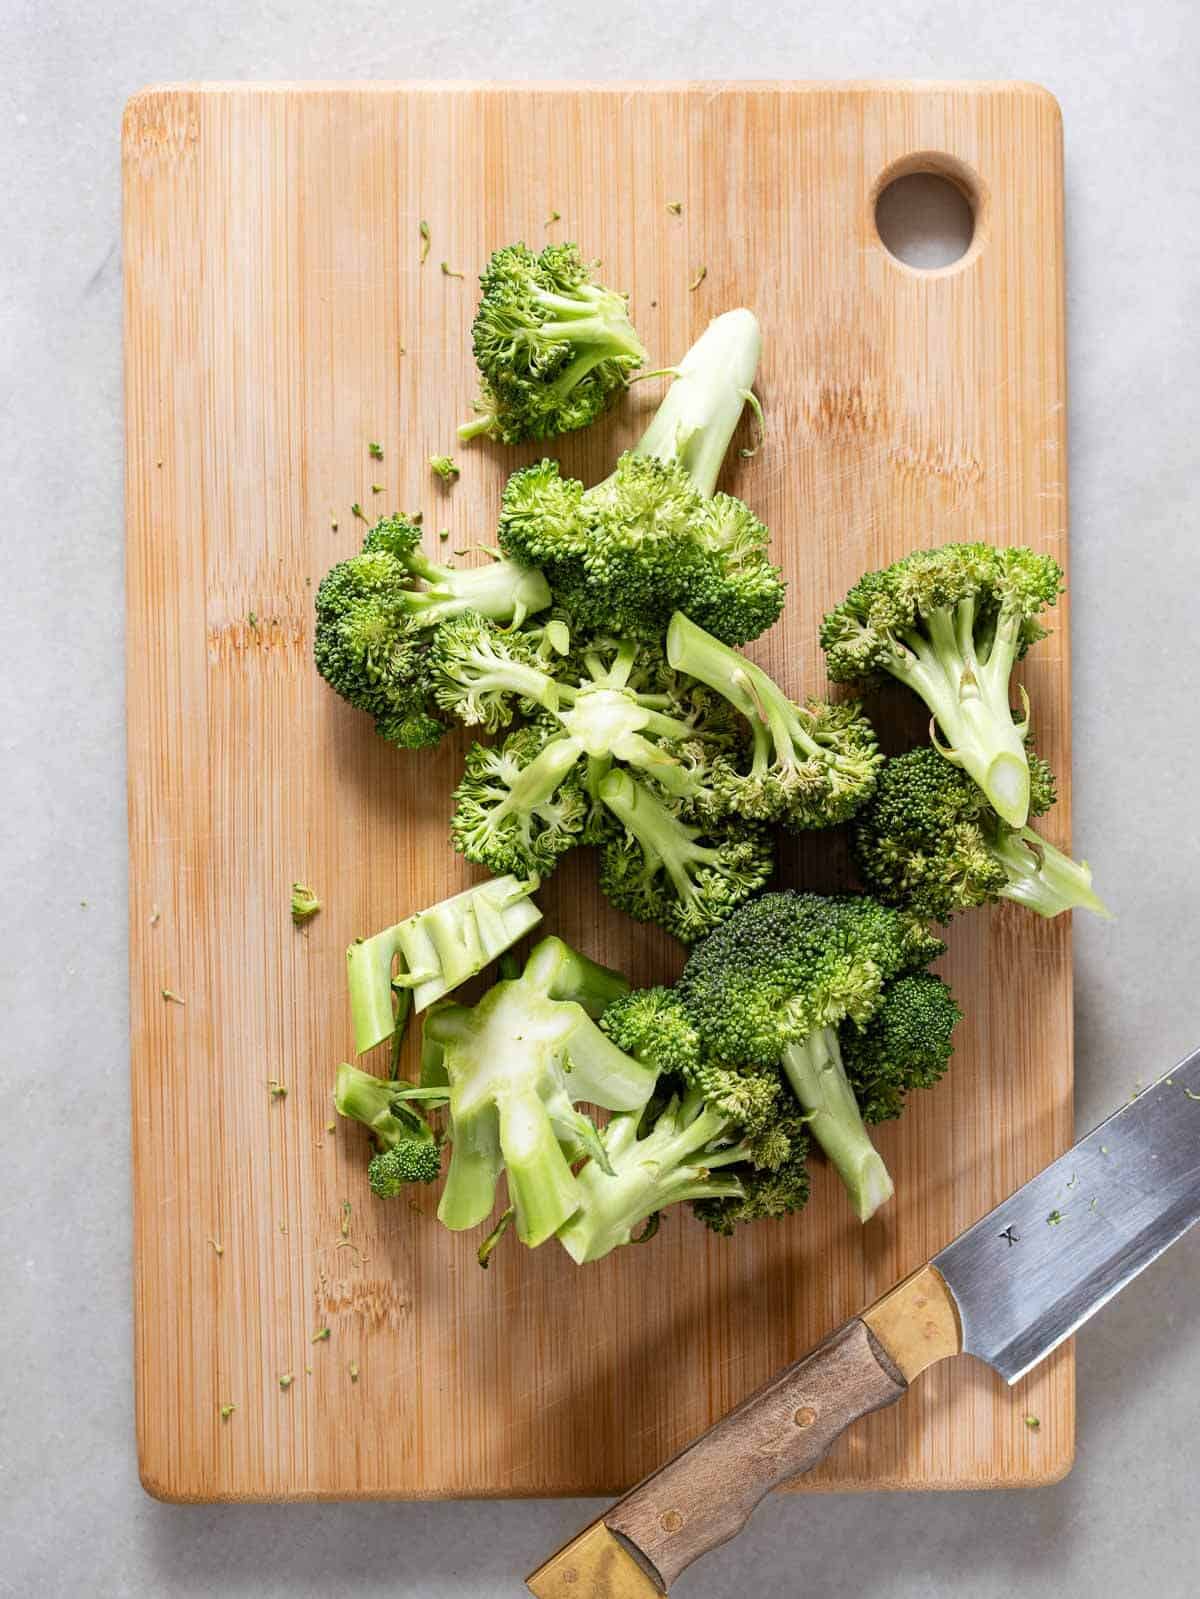 chop the broccoli into chunks.